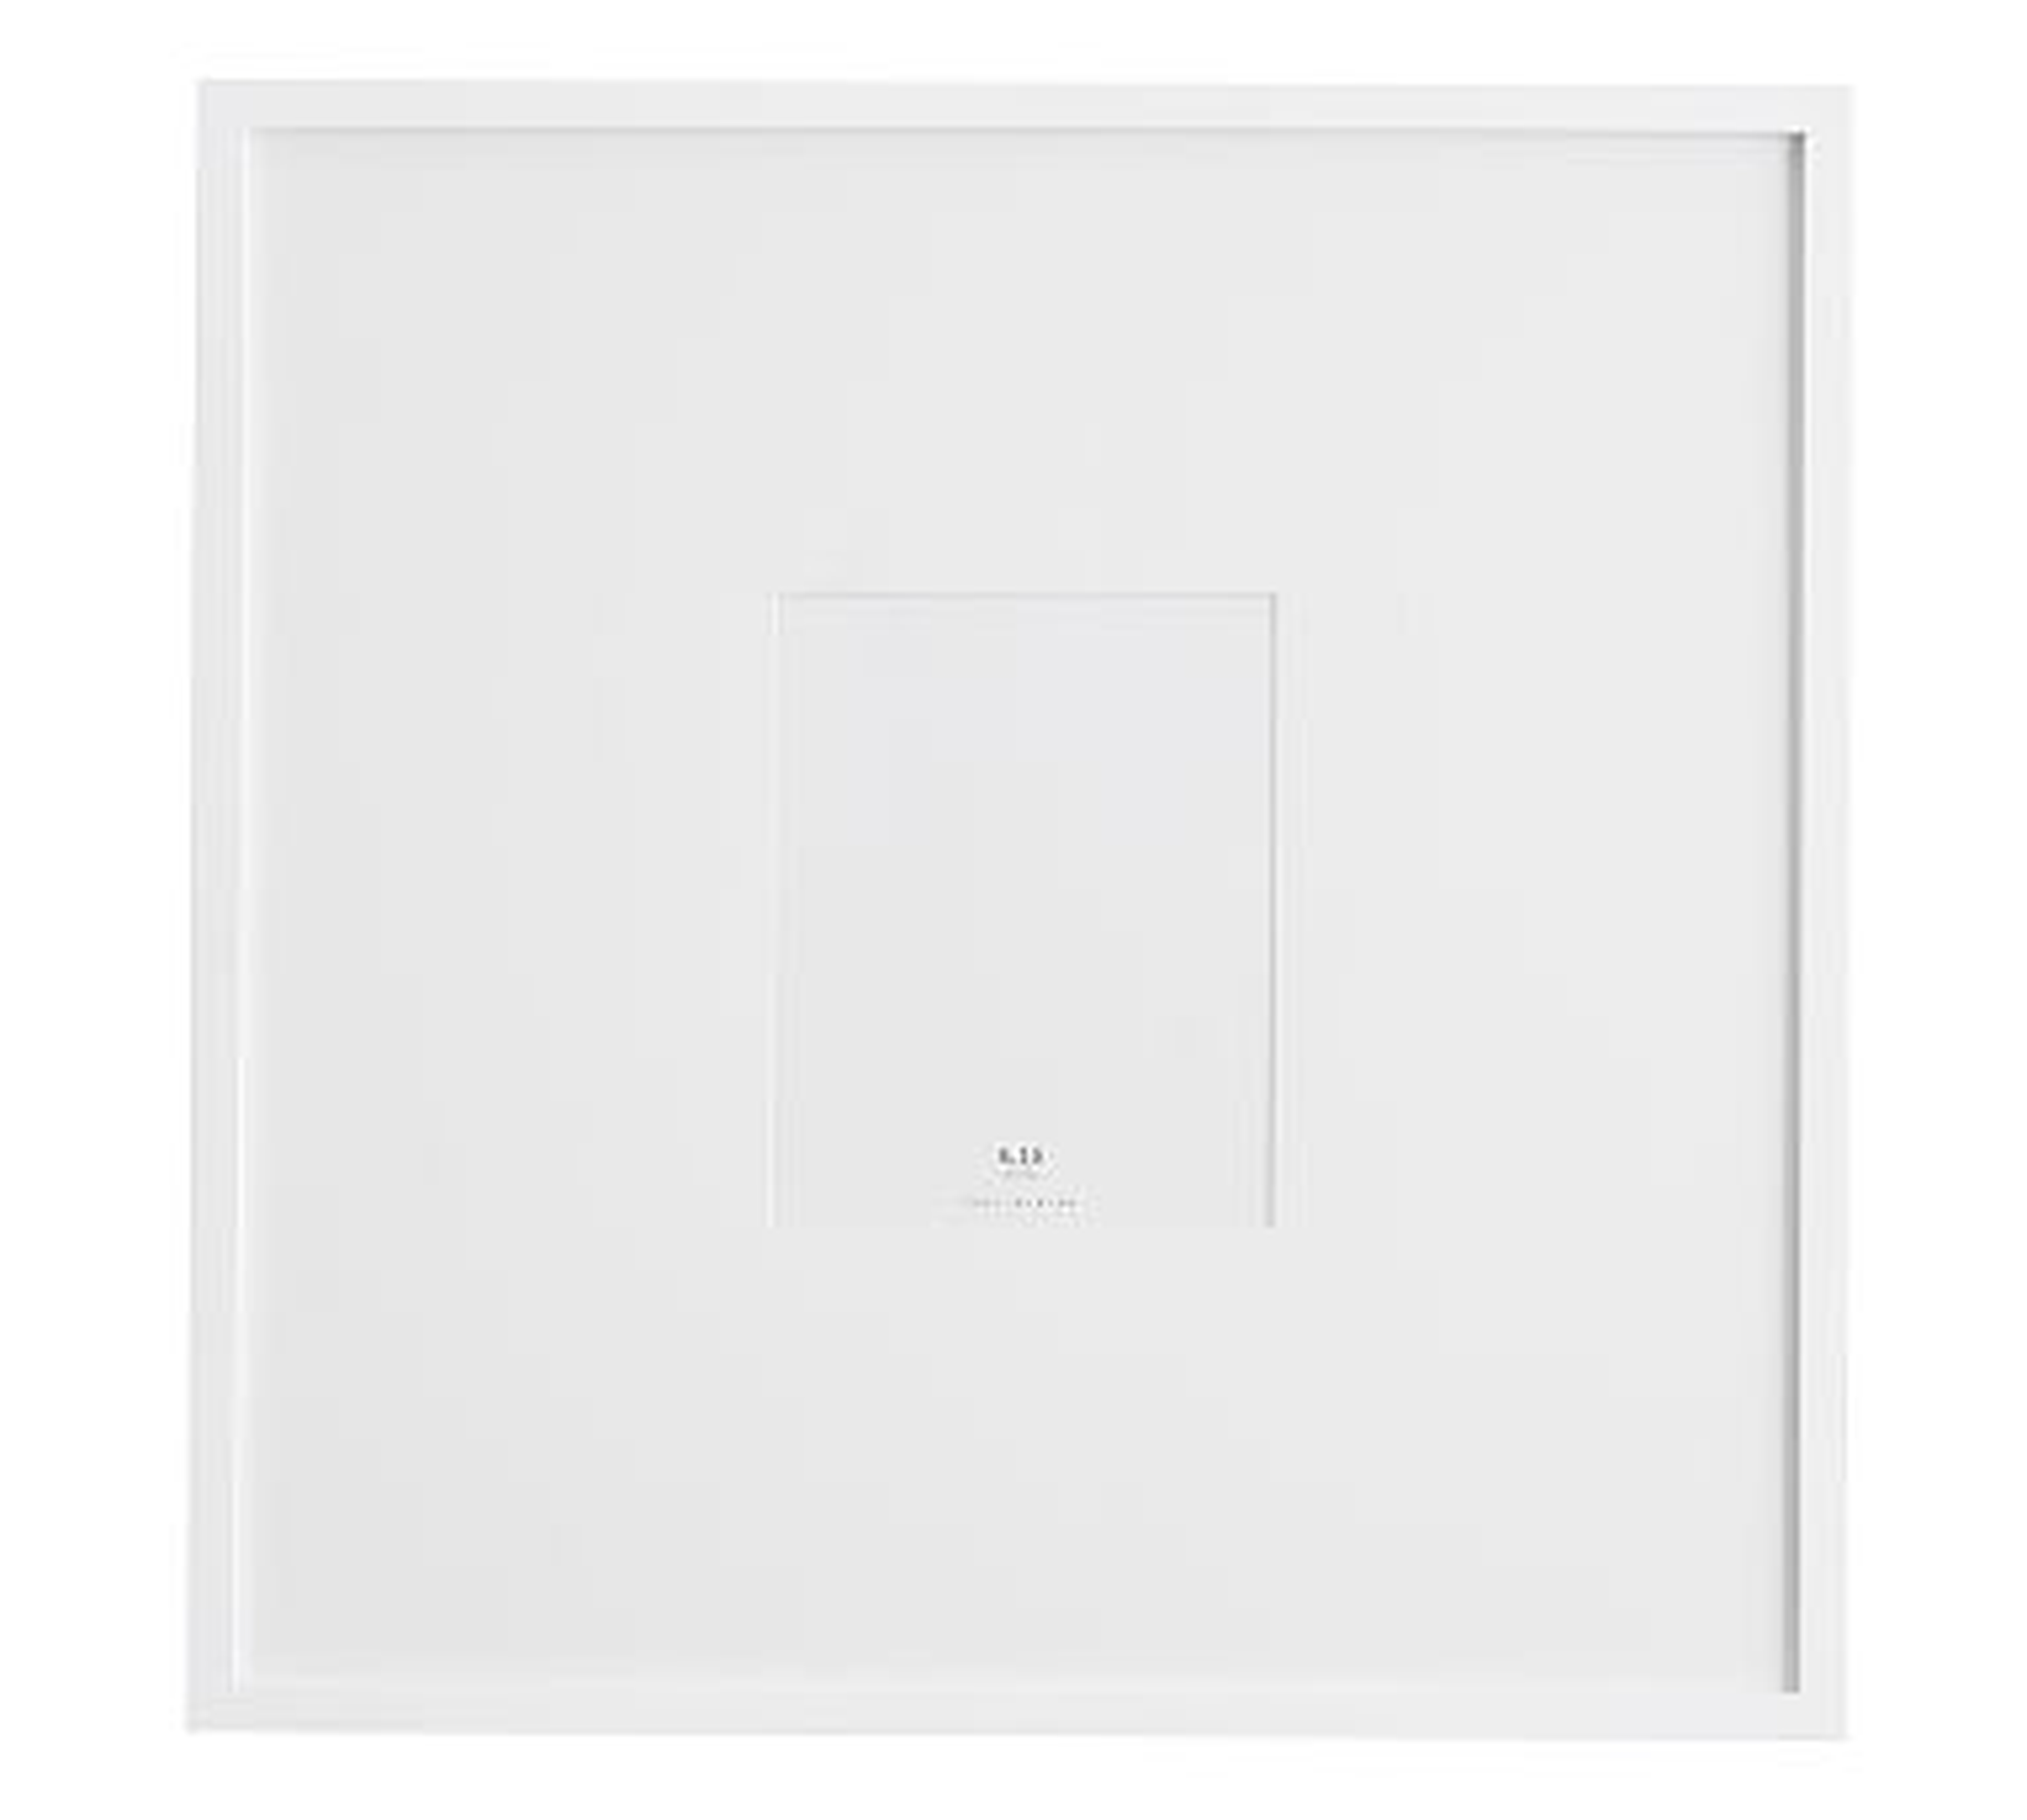 Wood Gallery Oversized Mat Frame, 8"x10" (25"x25" Overall), Modern White - Pottery Barn